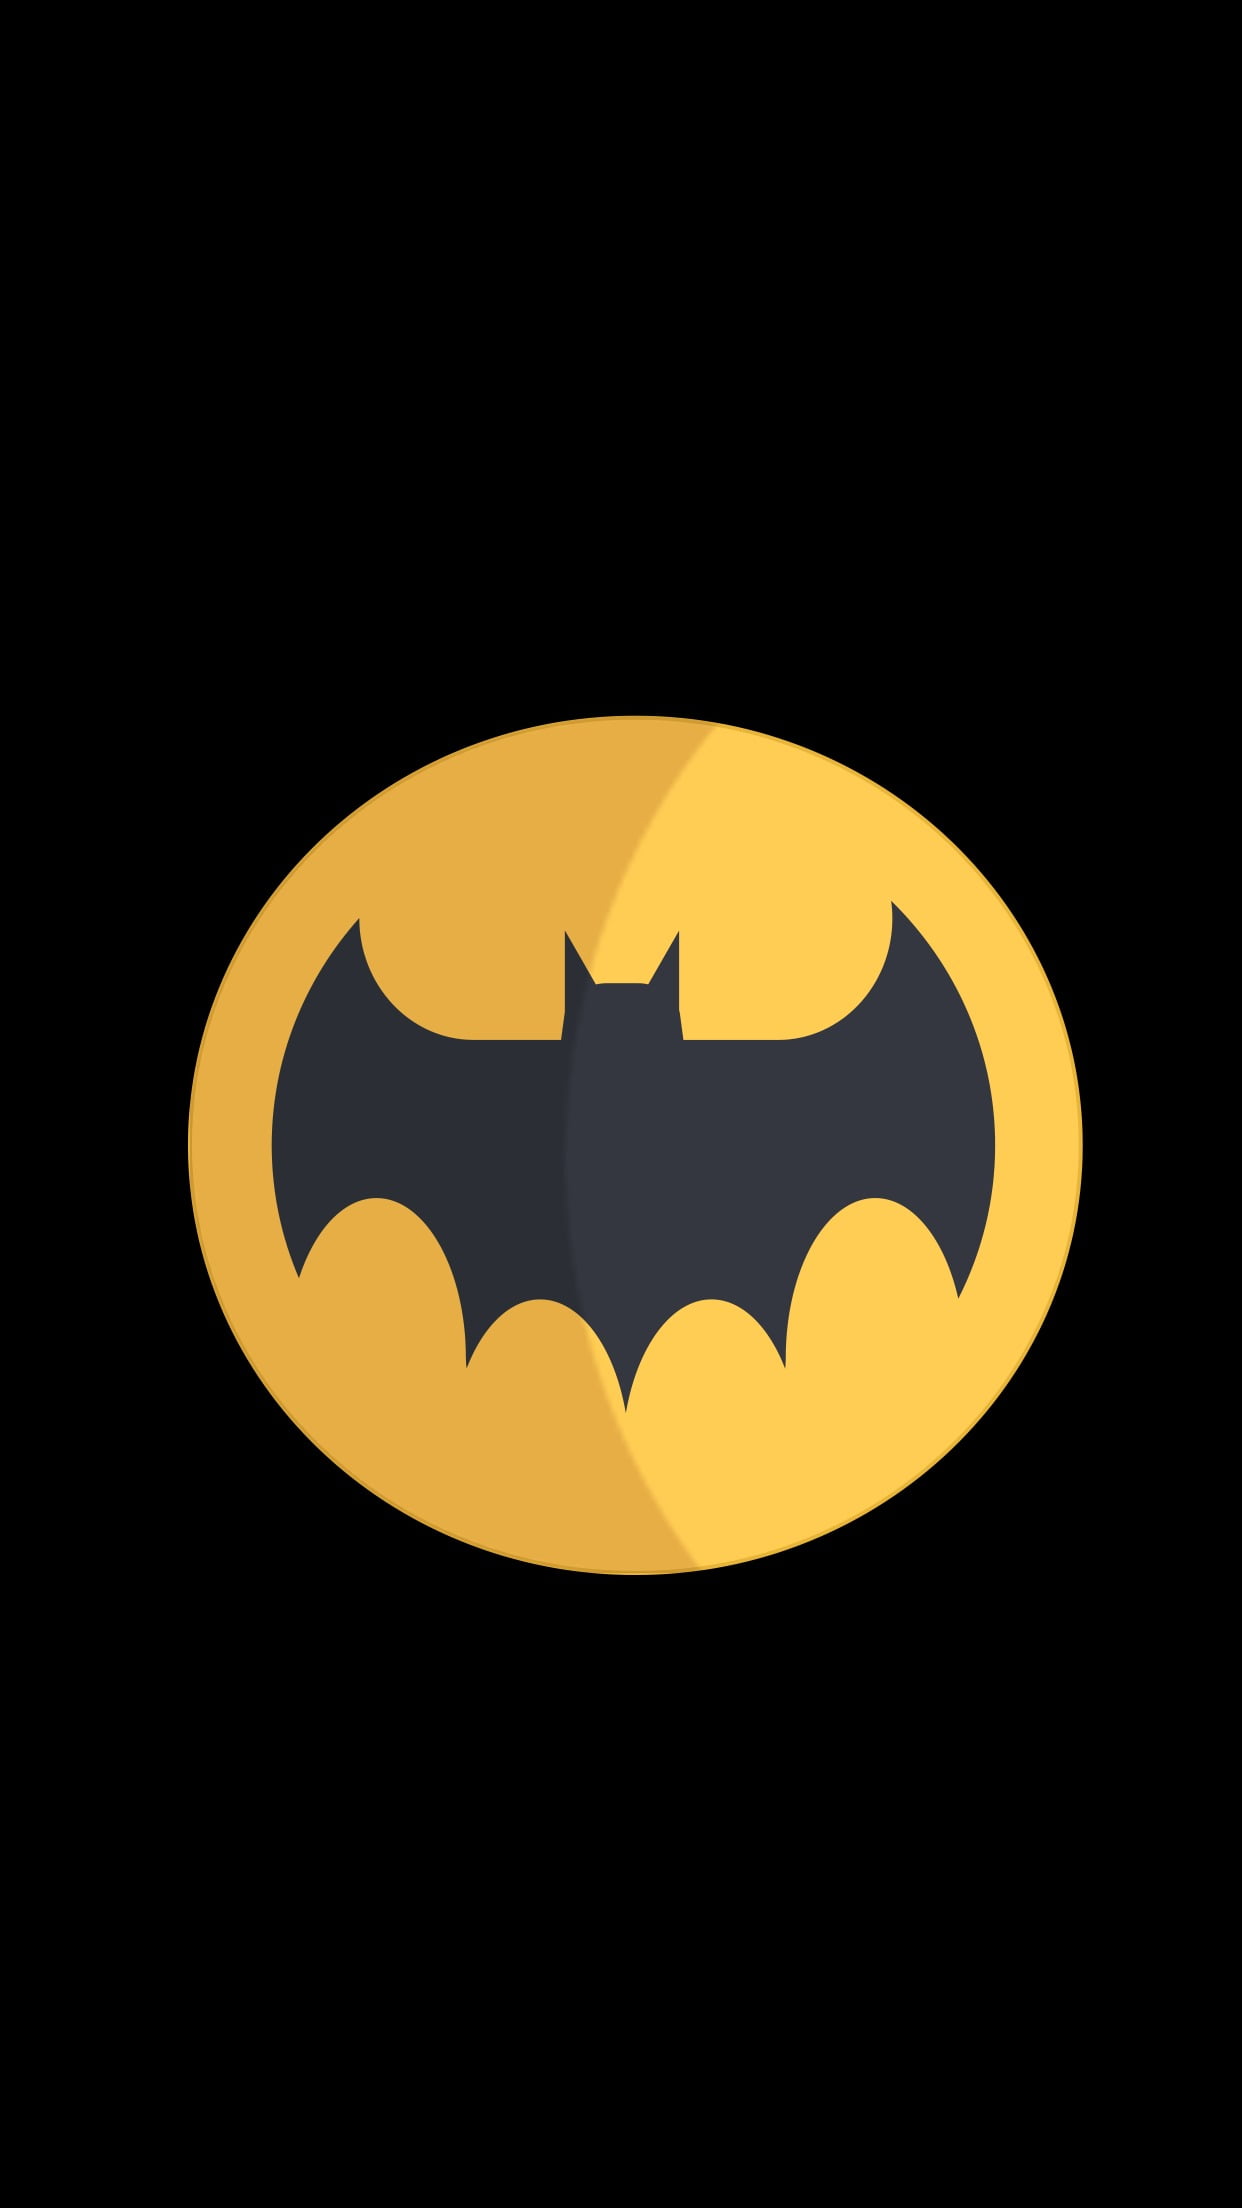 Batman logo, material minimal, no people, space, black background